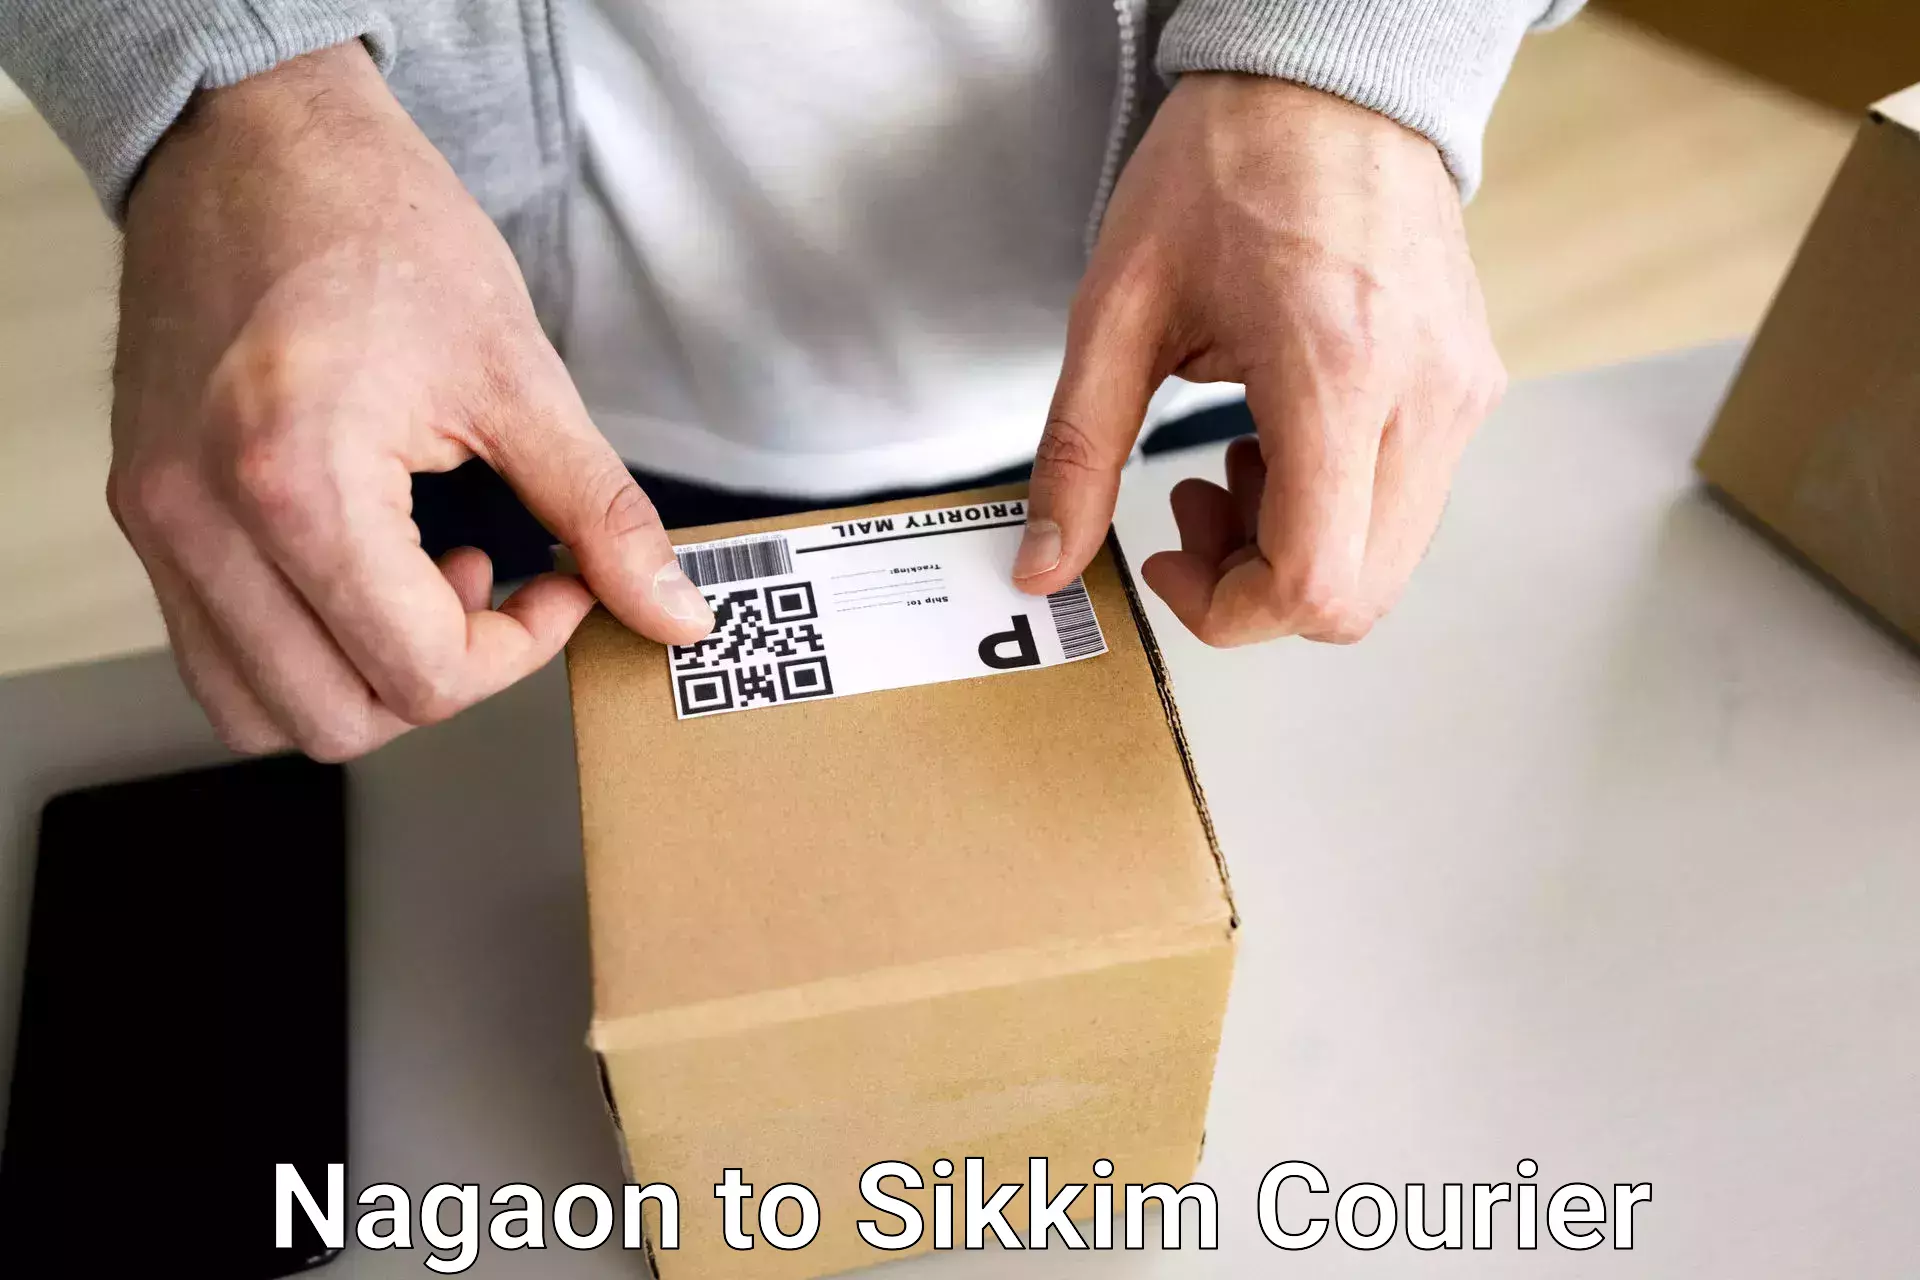 Luggage shipping guide Nagaon to Gangtok